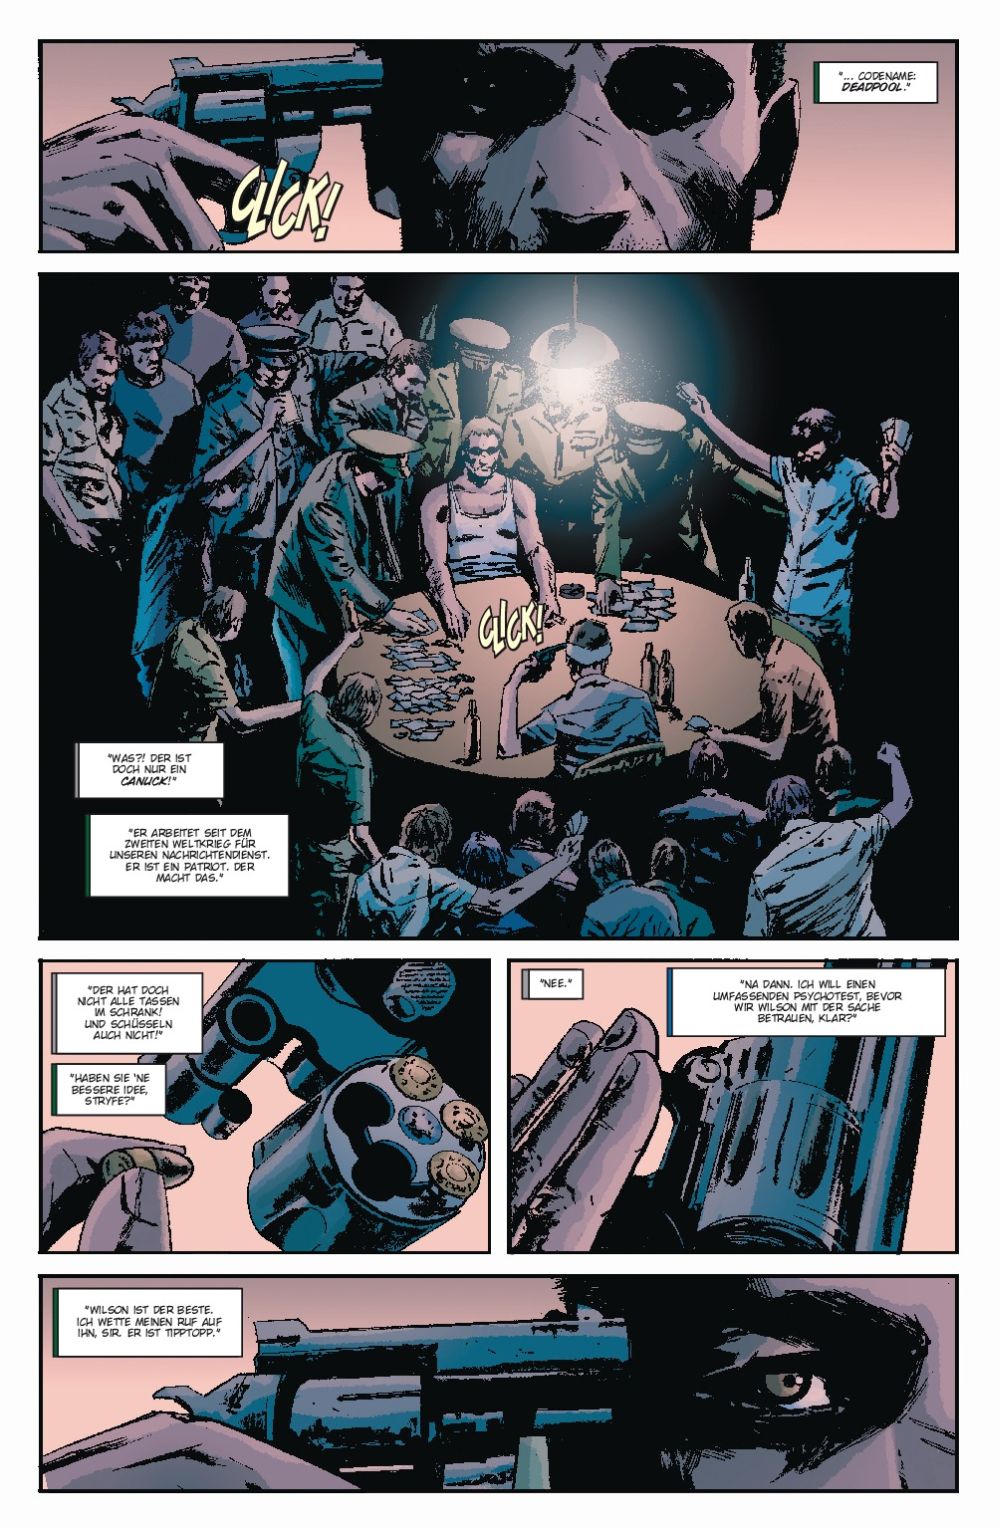 Marvel-Comic: DEADPOOL | PULP - Verlag: Panini-Verlag | Auszug aus dem Inhalt